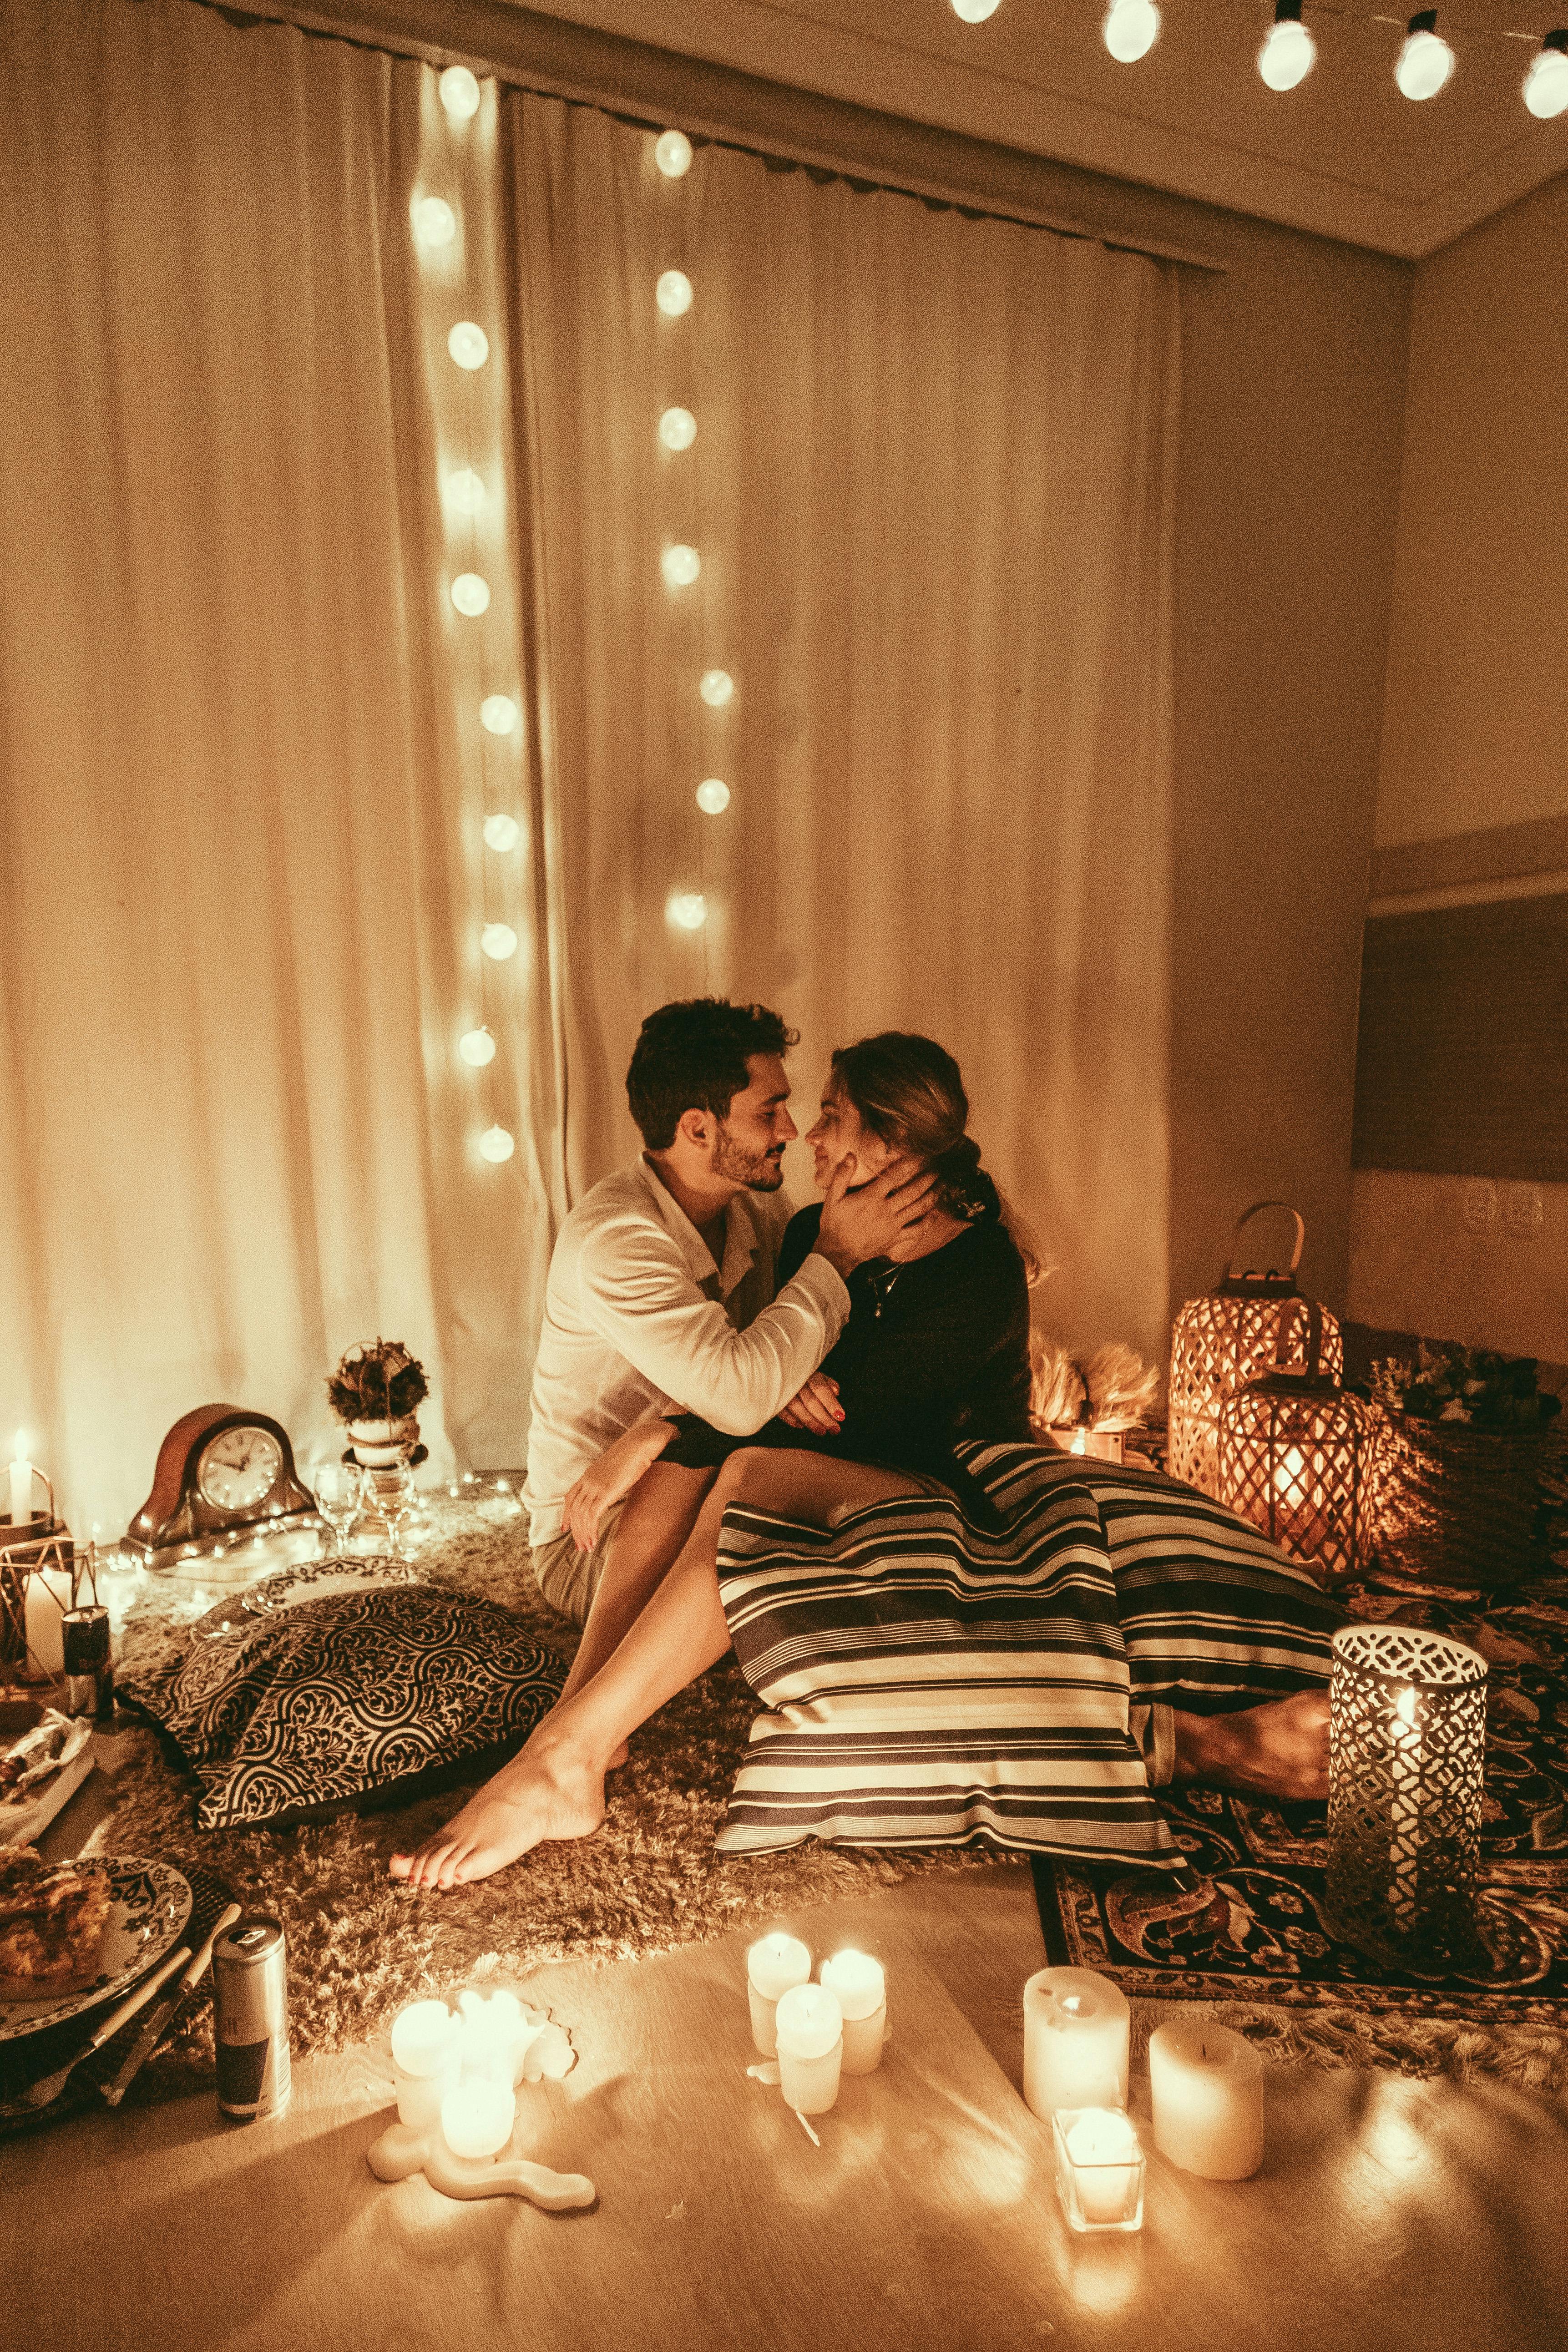 A couple bonding around a romantic setting | Source: Pexels